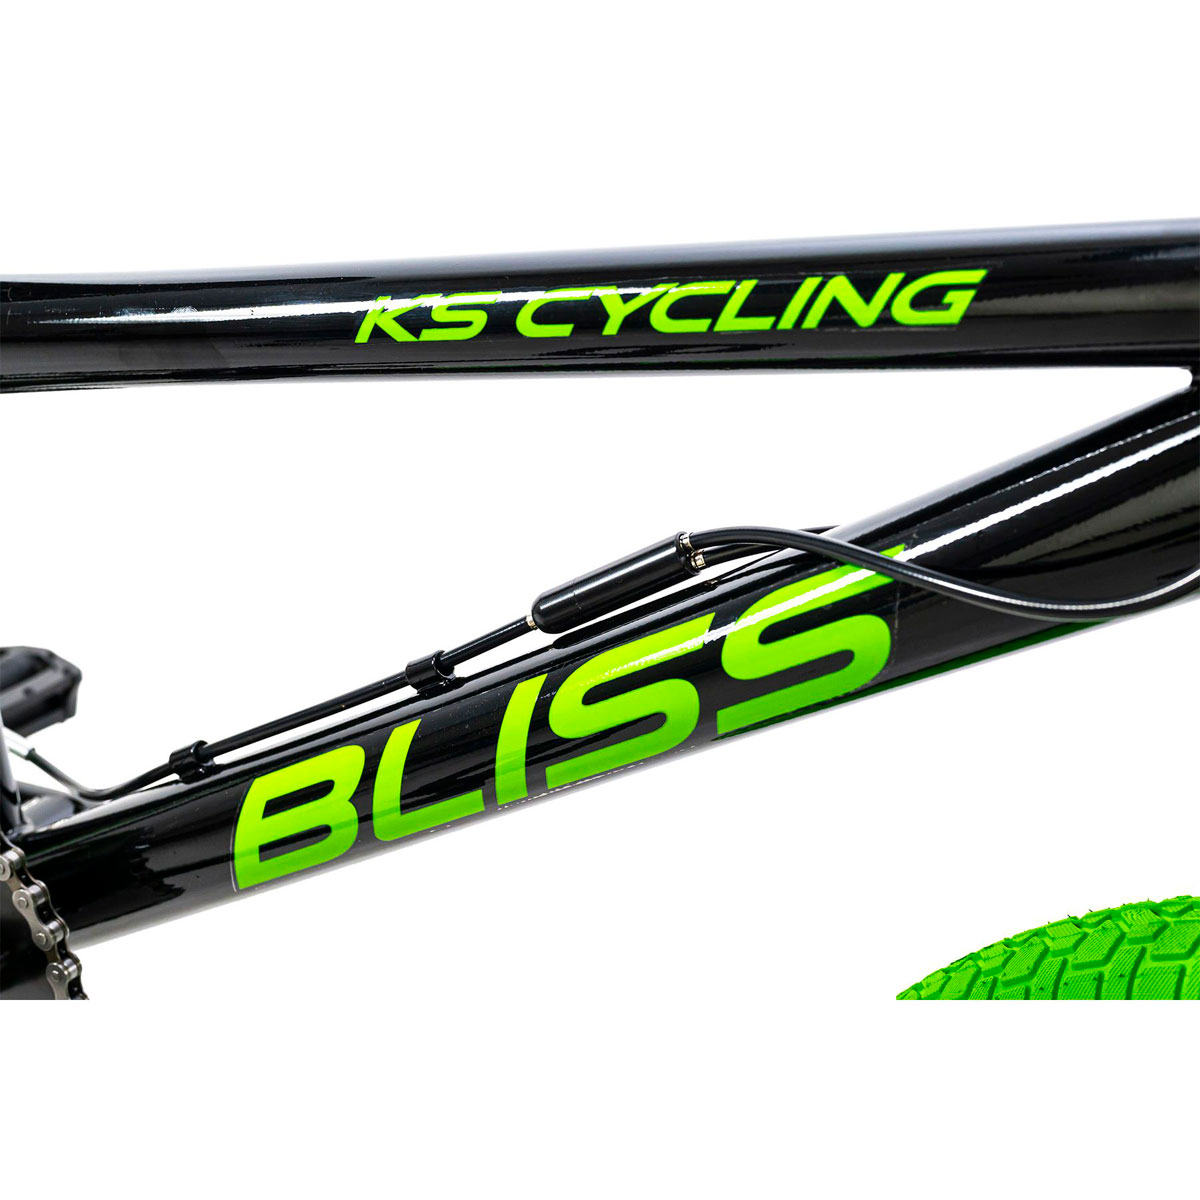 BMX-Rad „Bliss“, schwarz